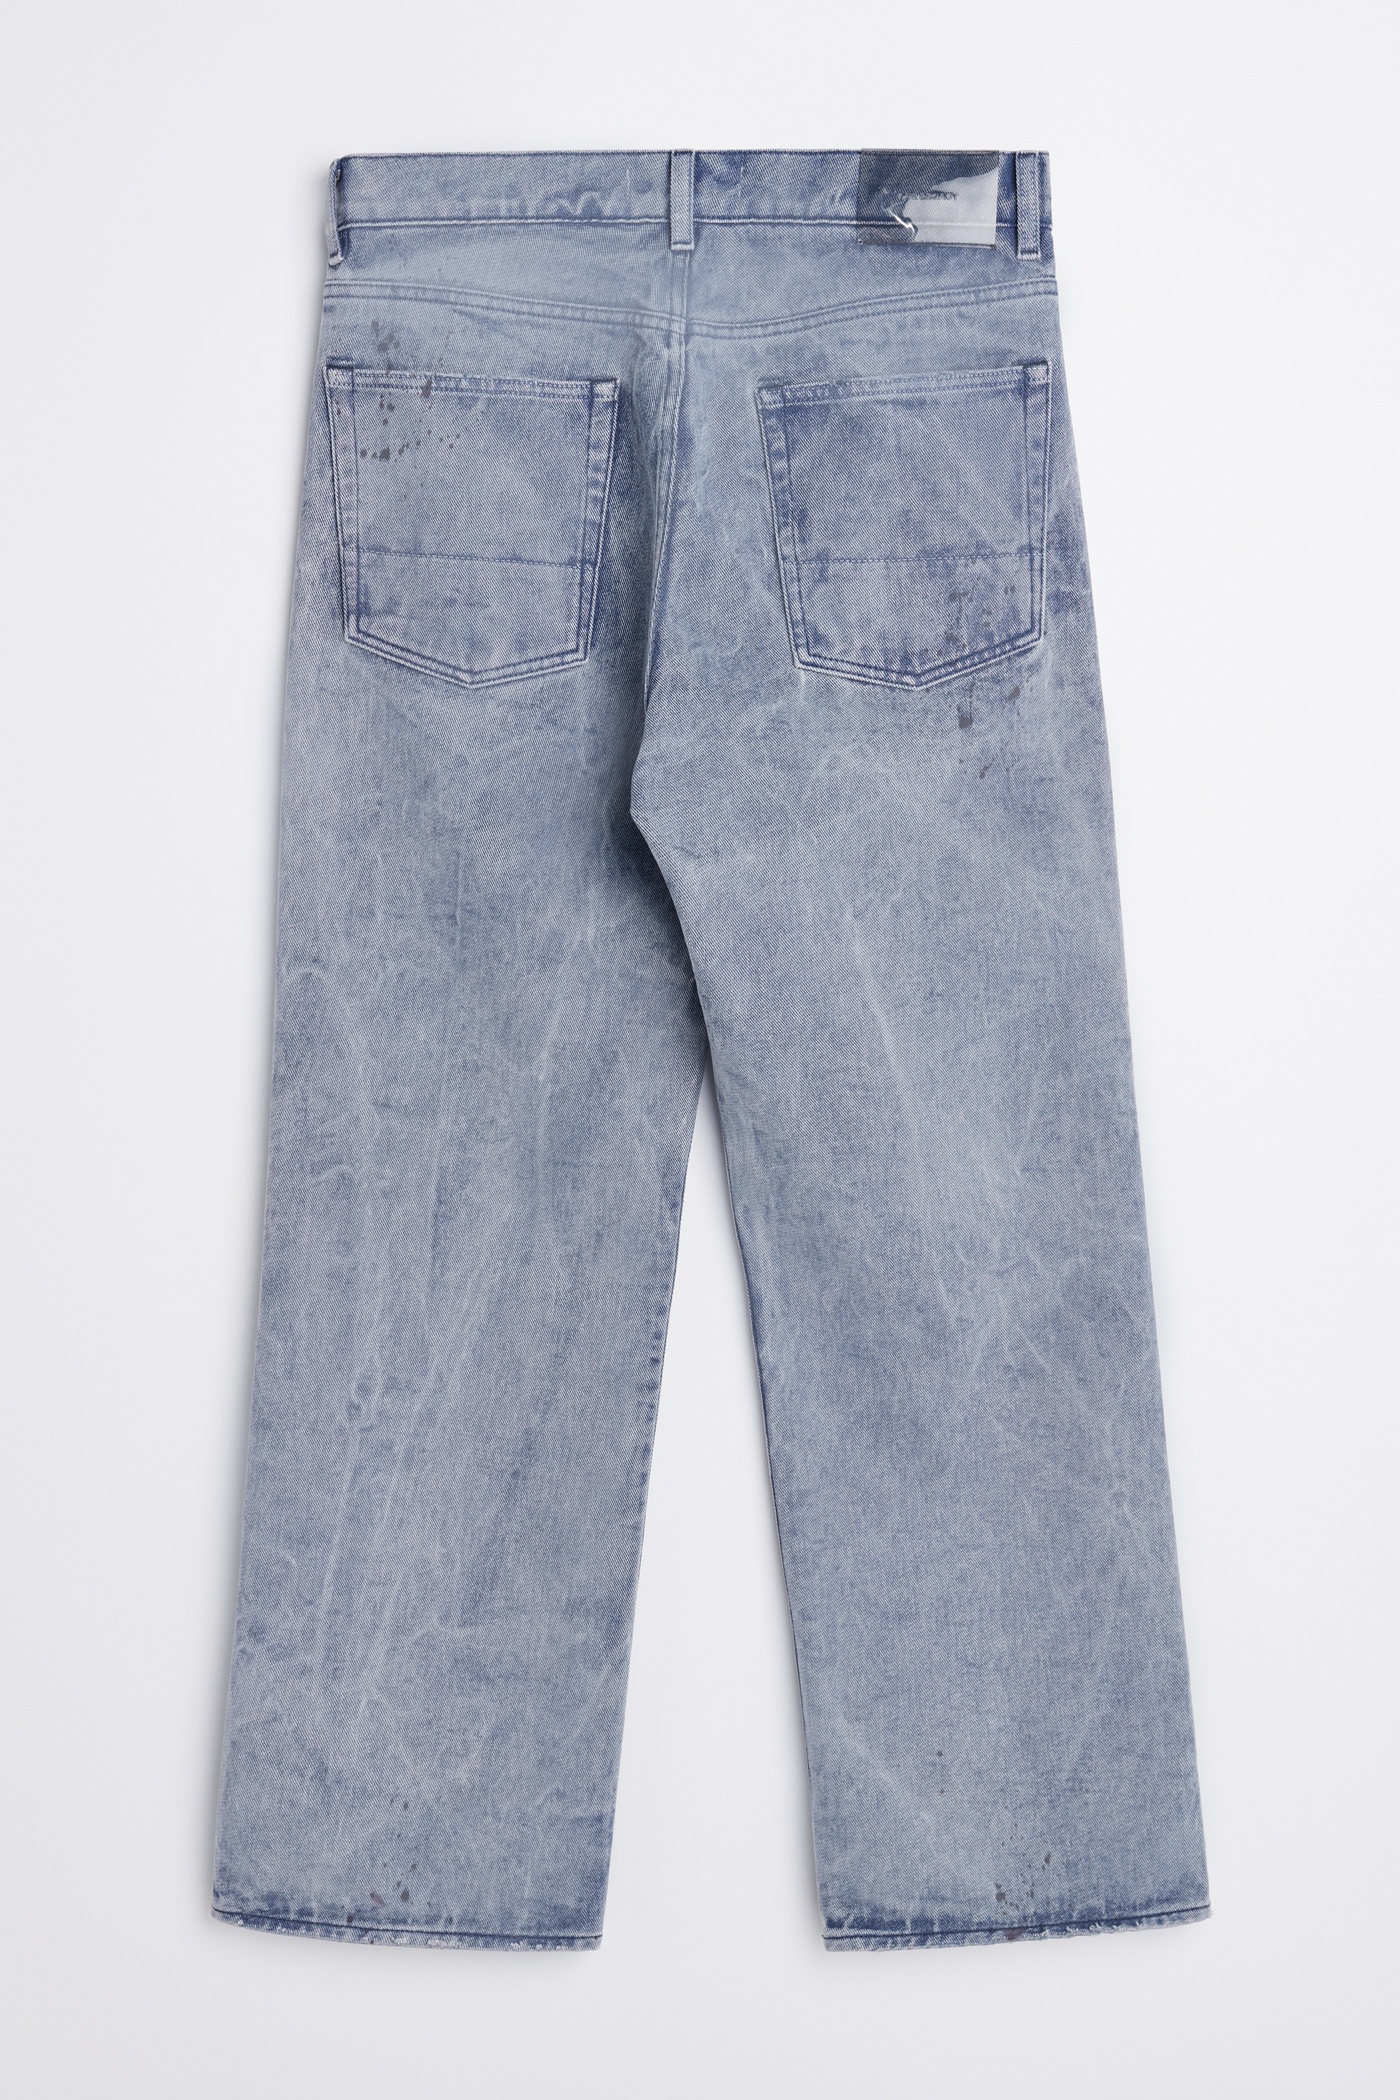 Third Cut Jeans Twilight Attic Wash - 9